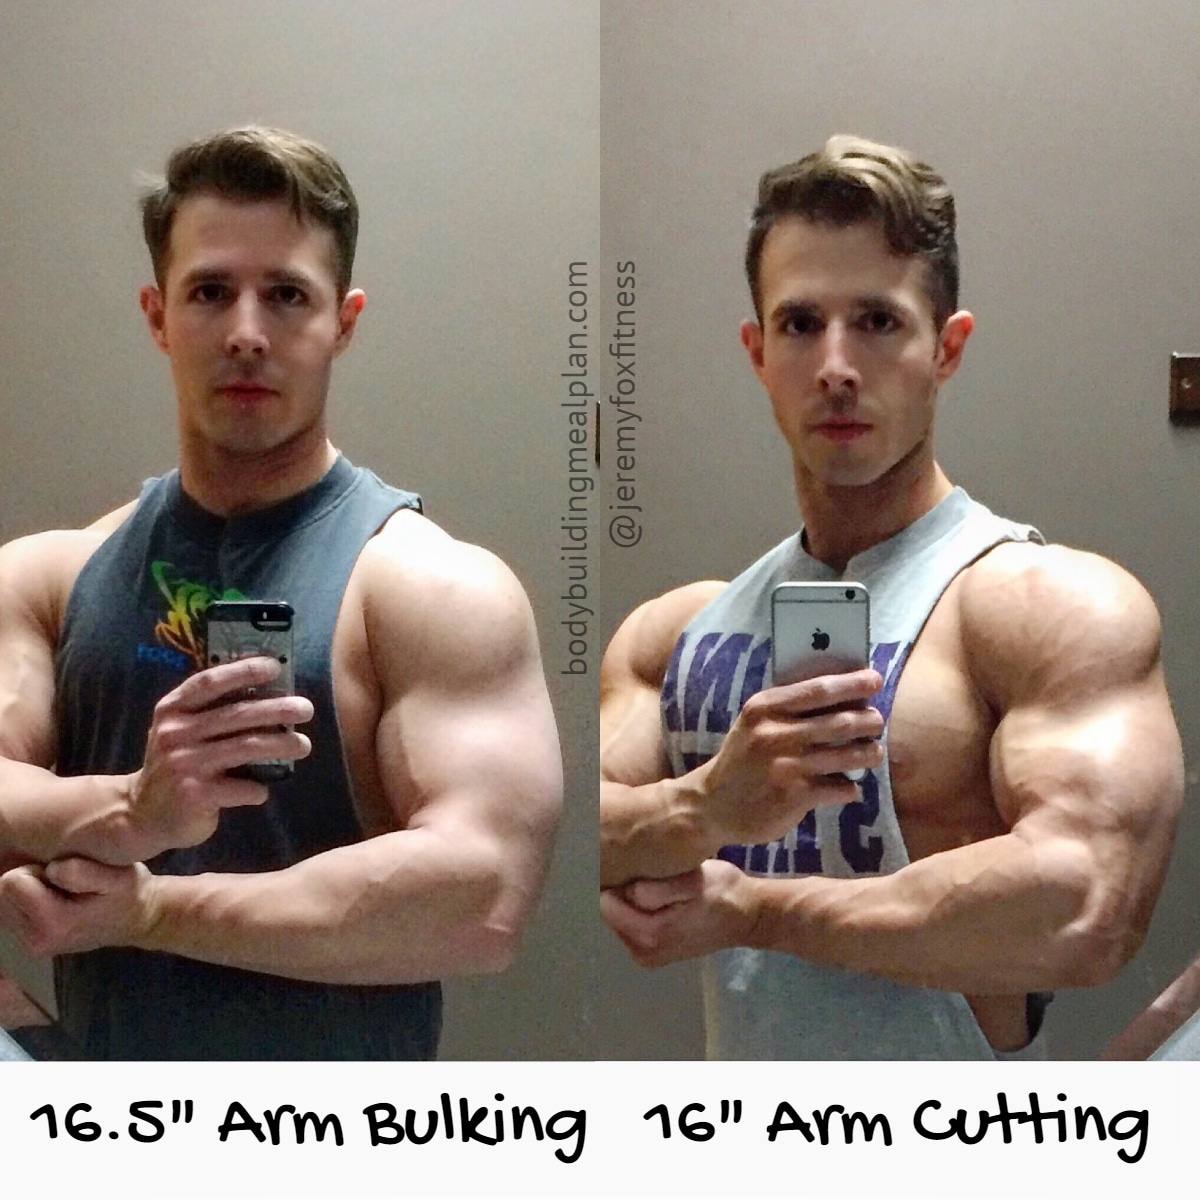 17 Inch Arms Bulk vs Cut